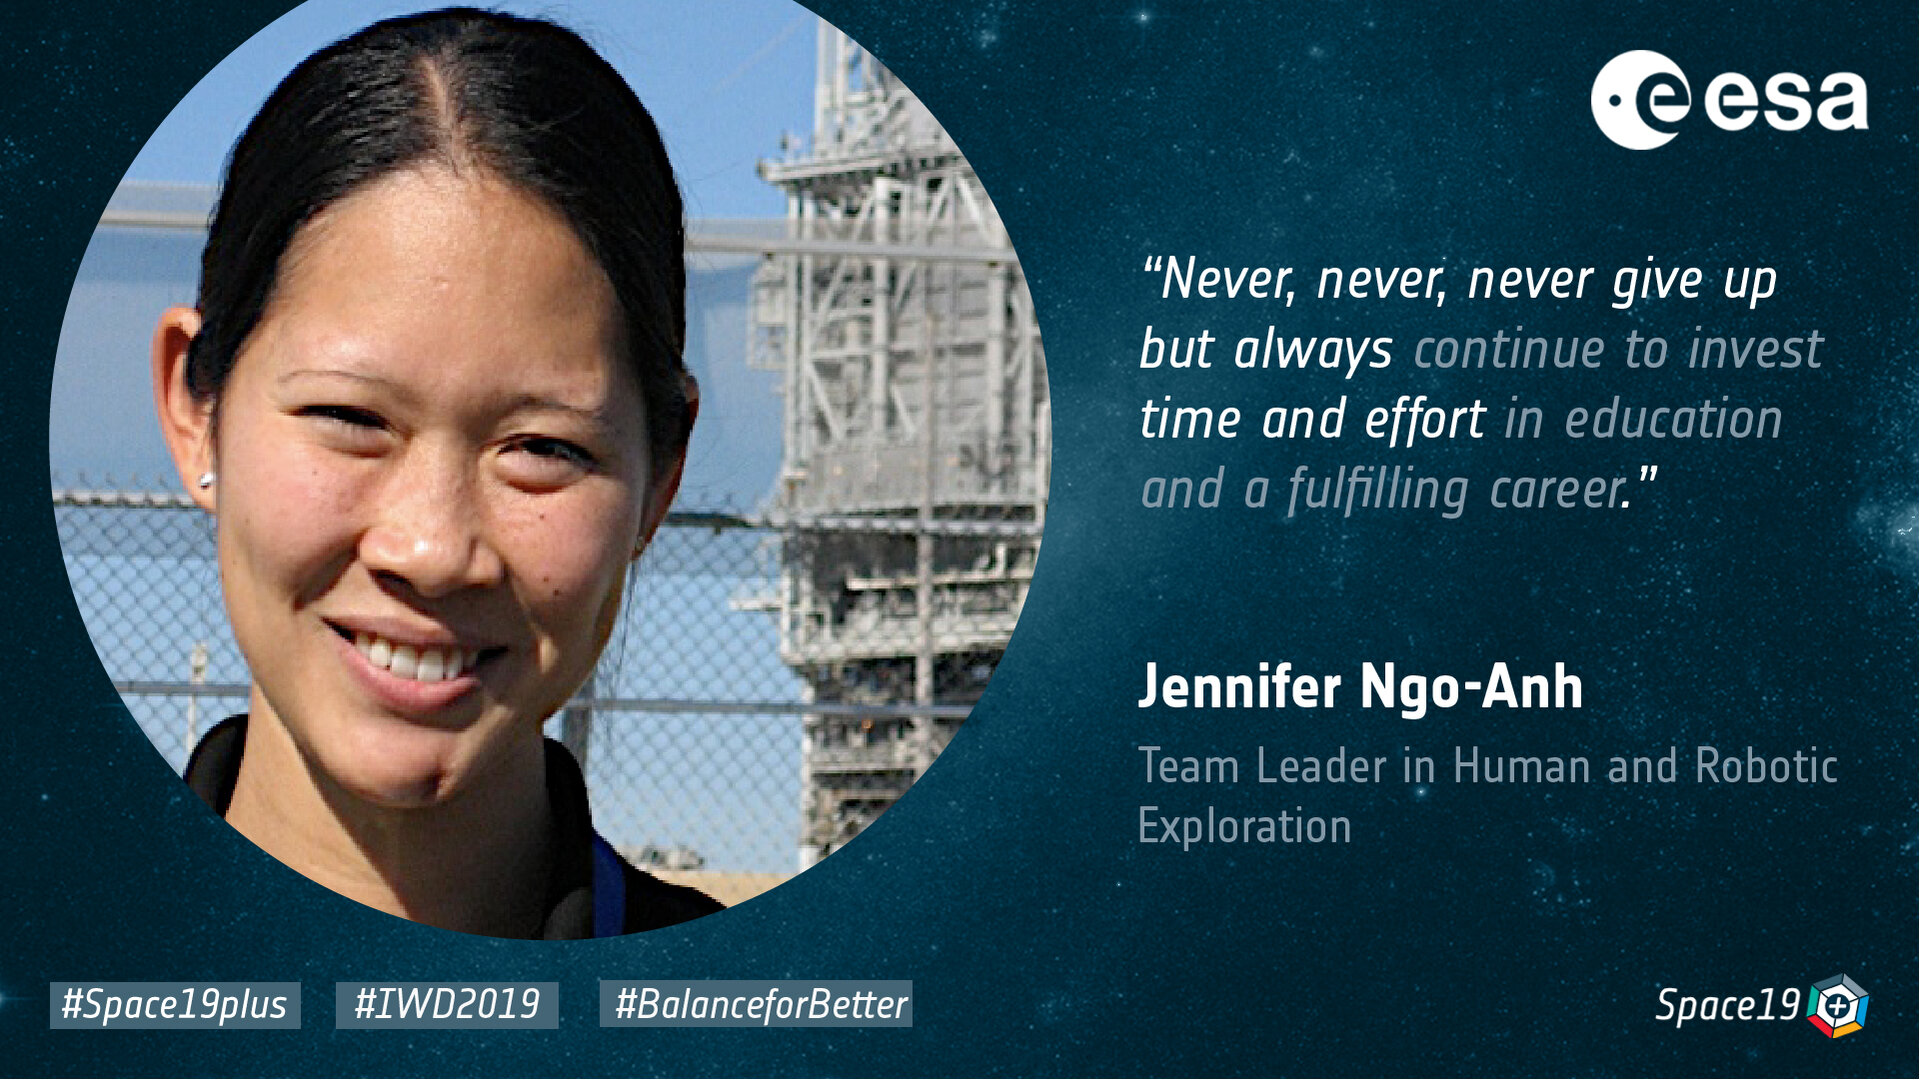 Jennifer Ngo-Anh, Team Leader, Human and Robotic Exploration